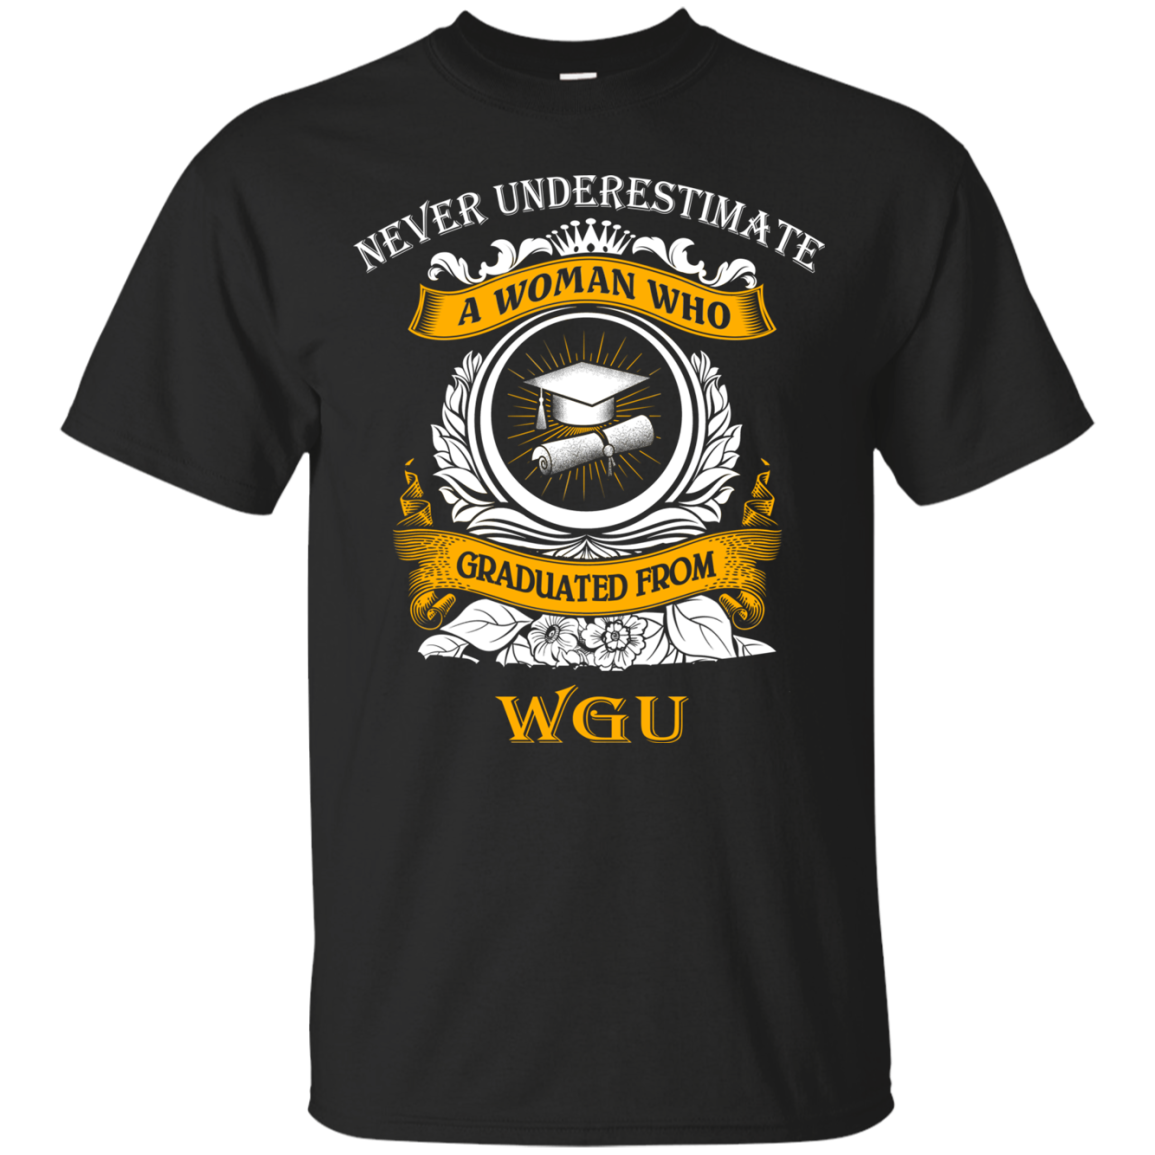 WGU Graduate Woman Shirts - Amyna